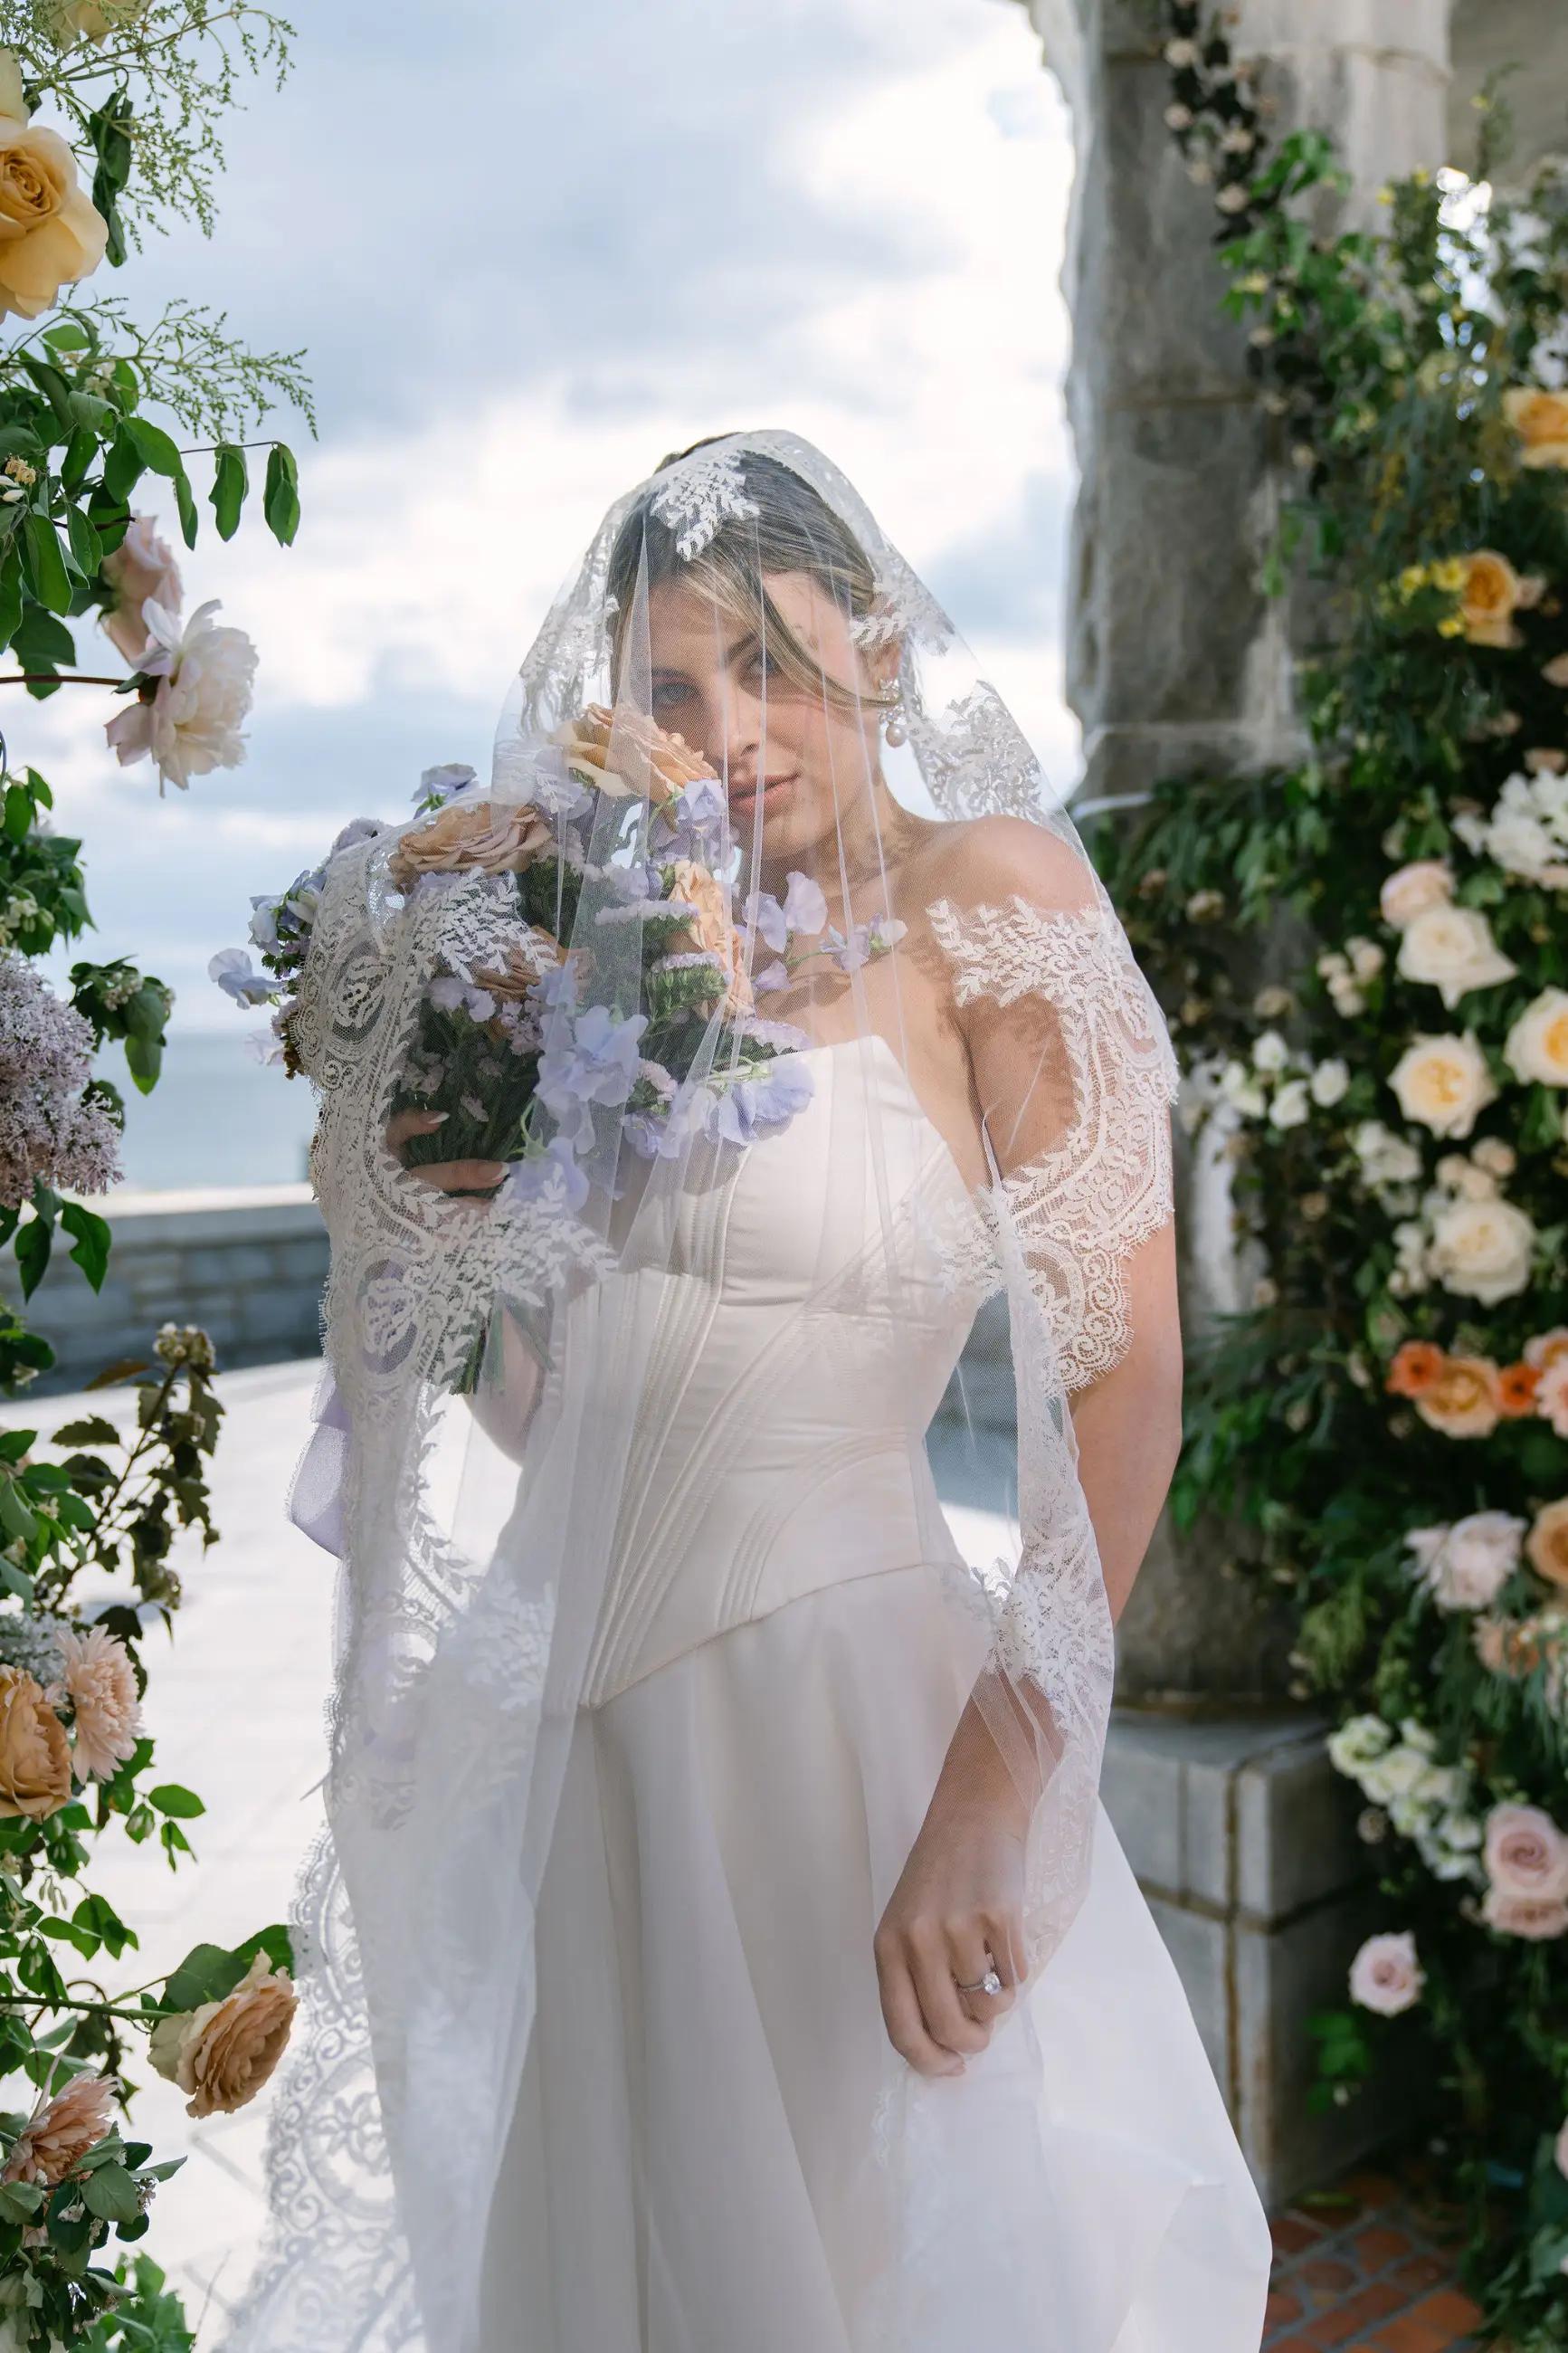 Waterfront Elegance: A Saint Bridal Gown at Branford House. Desktop Image